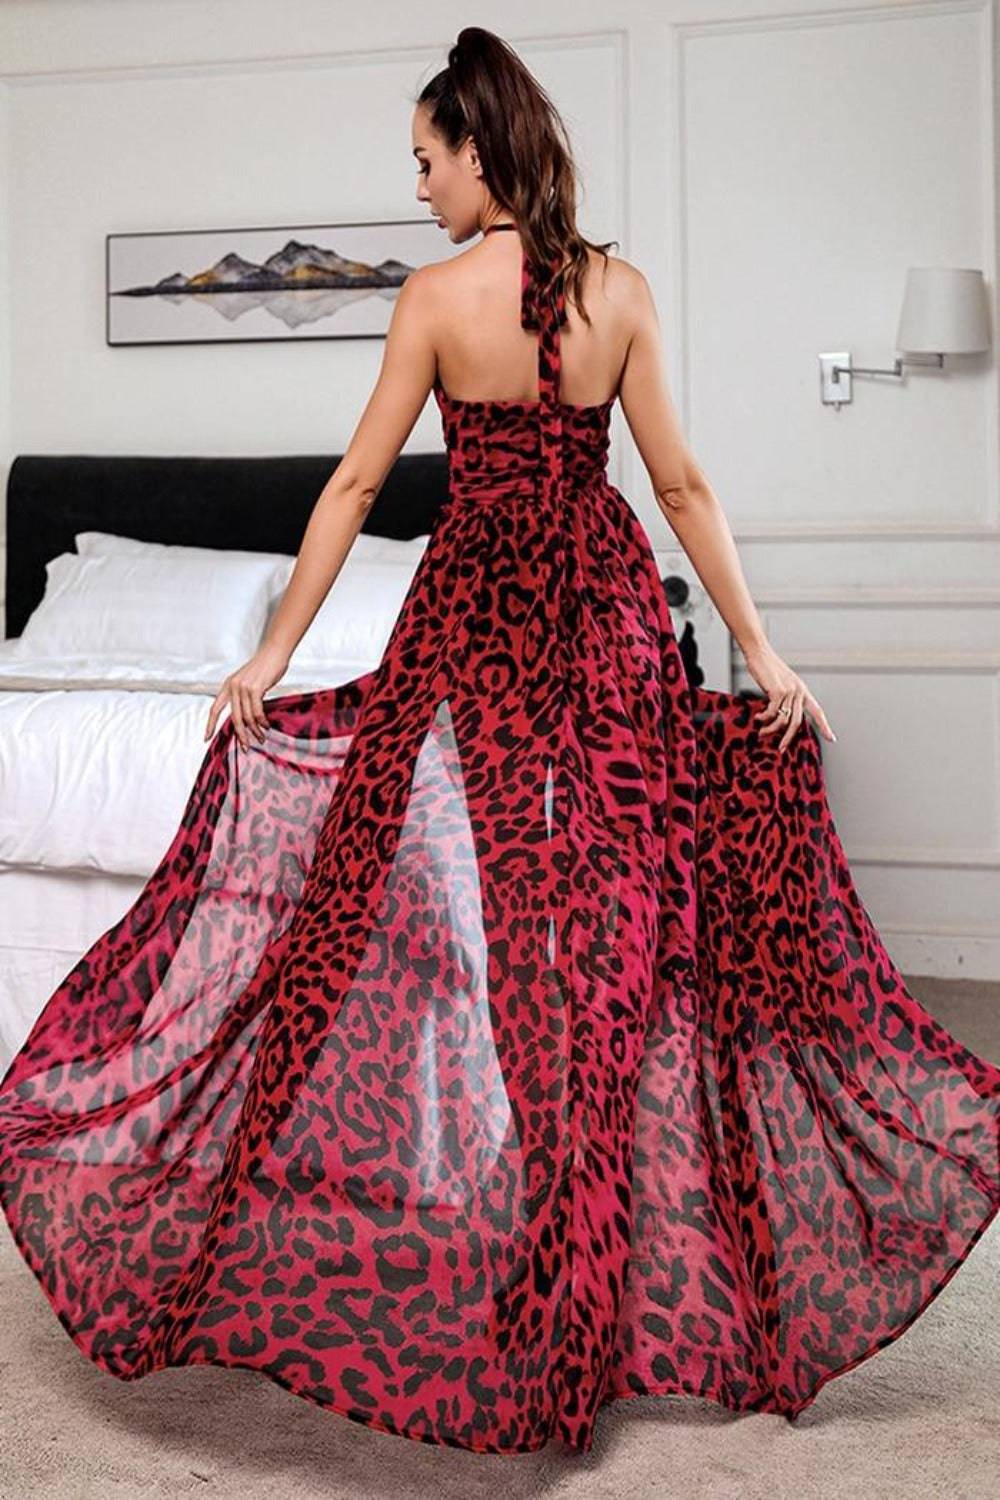 Jennifer Red Leopard Print Cut Out Maxi Dress - TGC Boutique - Leopard Dress